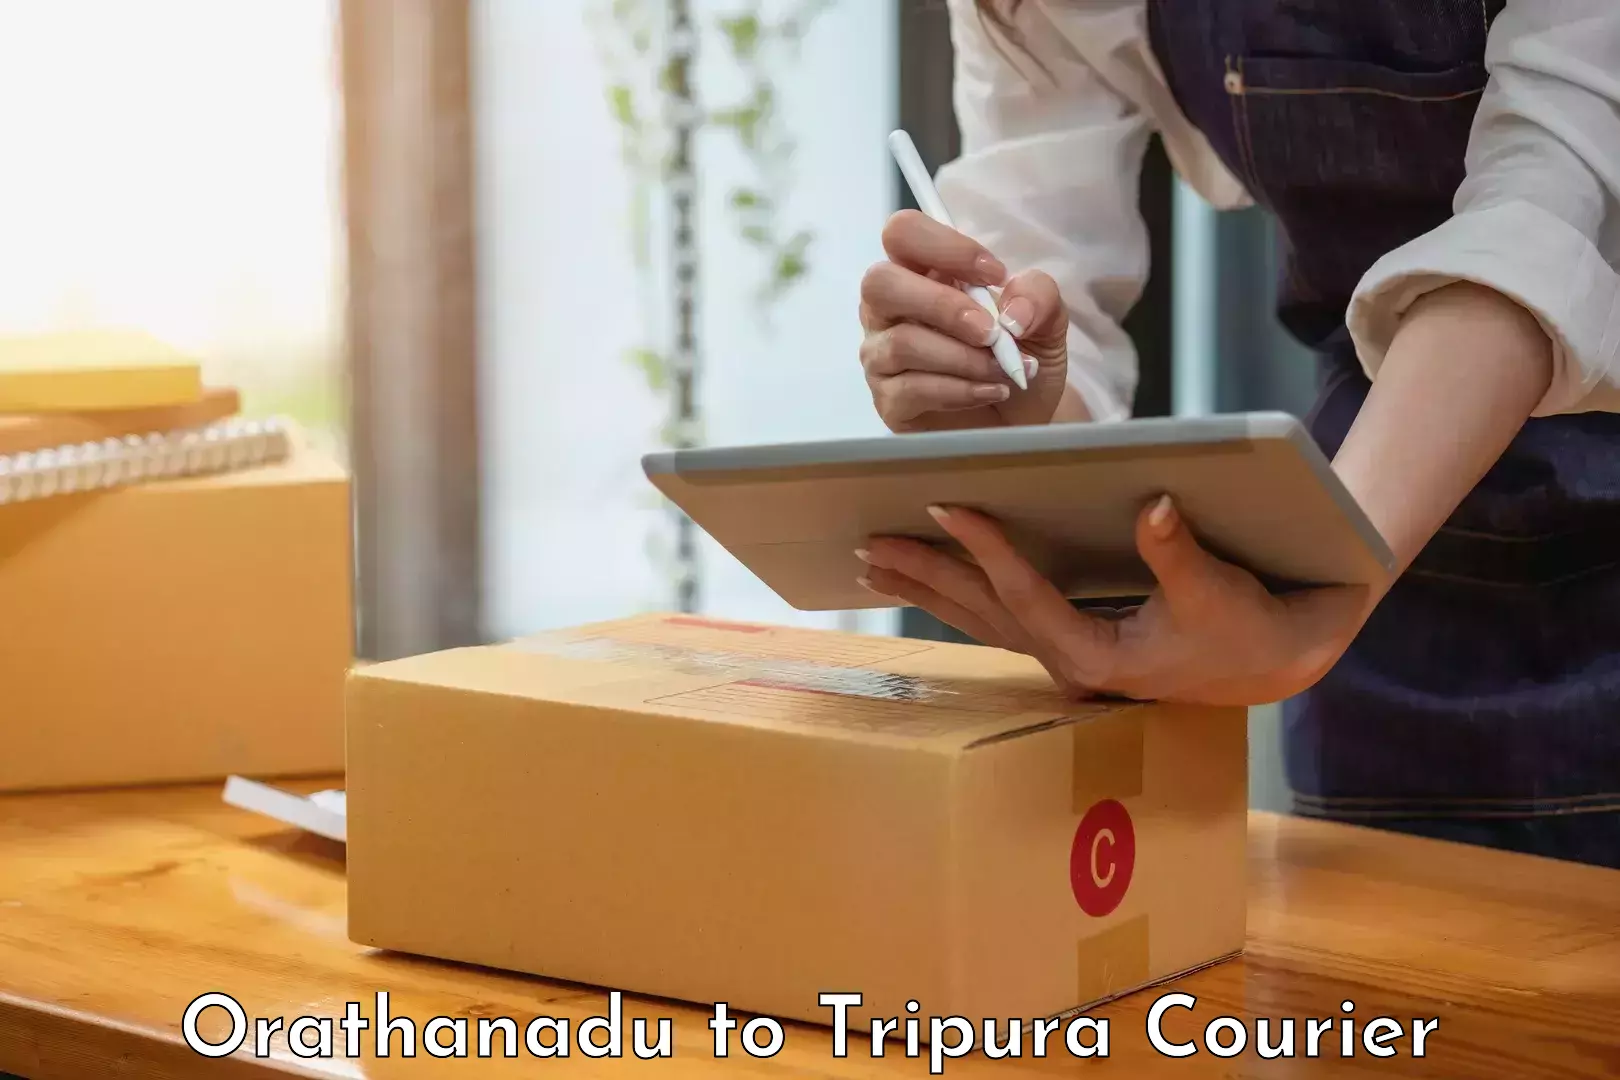 Reliable logistics providers Orathanadu to North Tripura